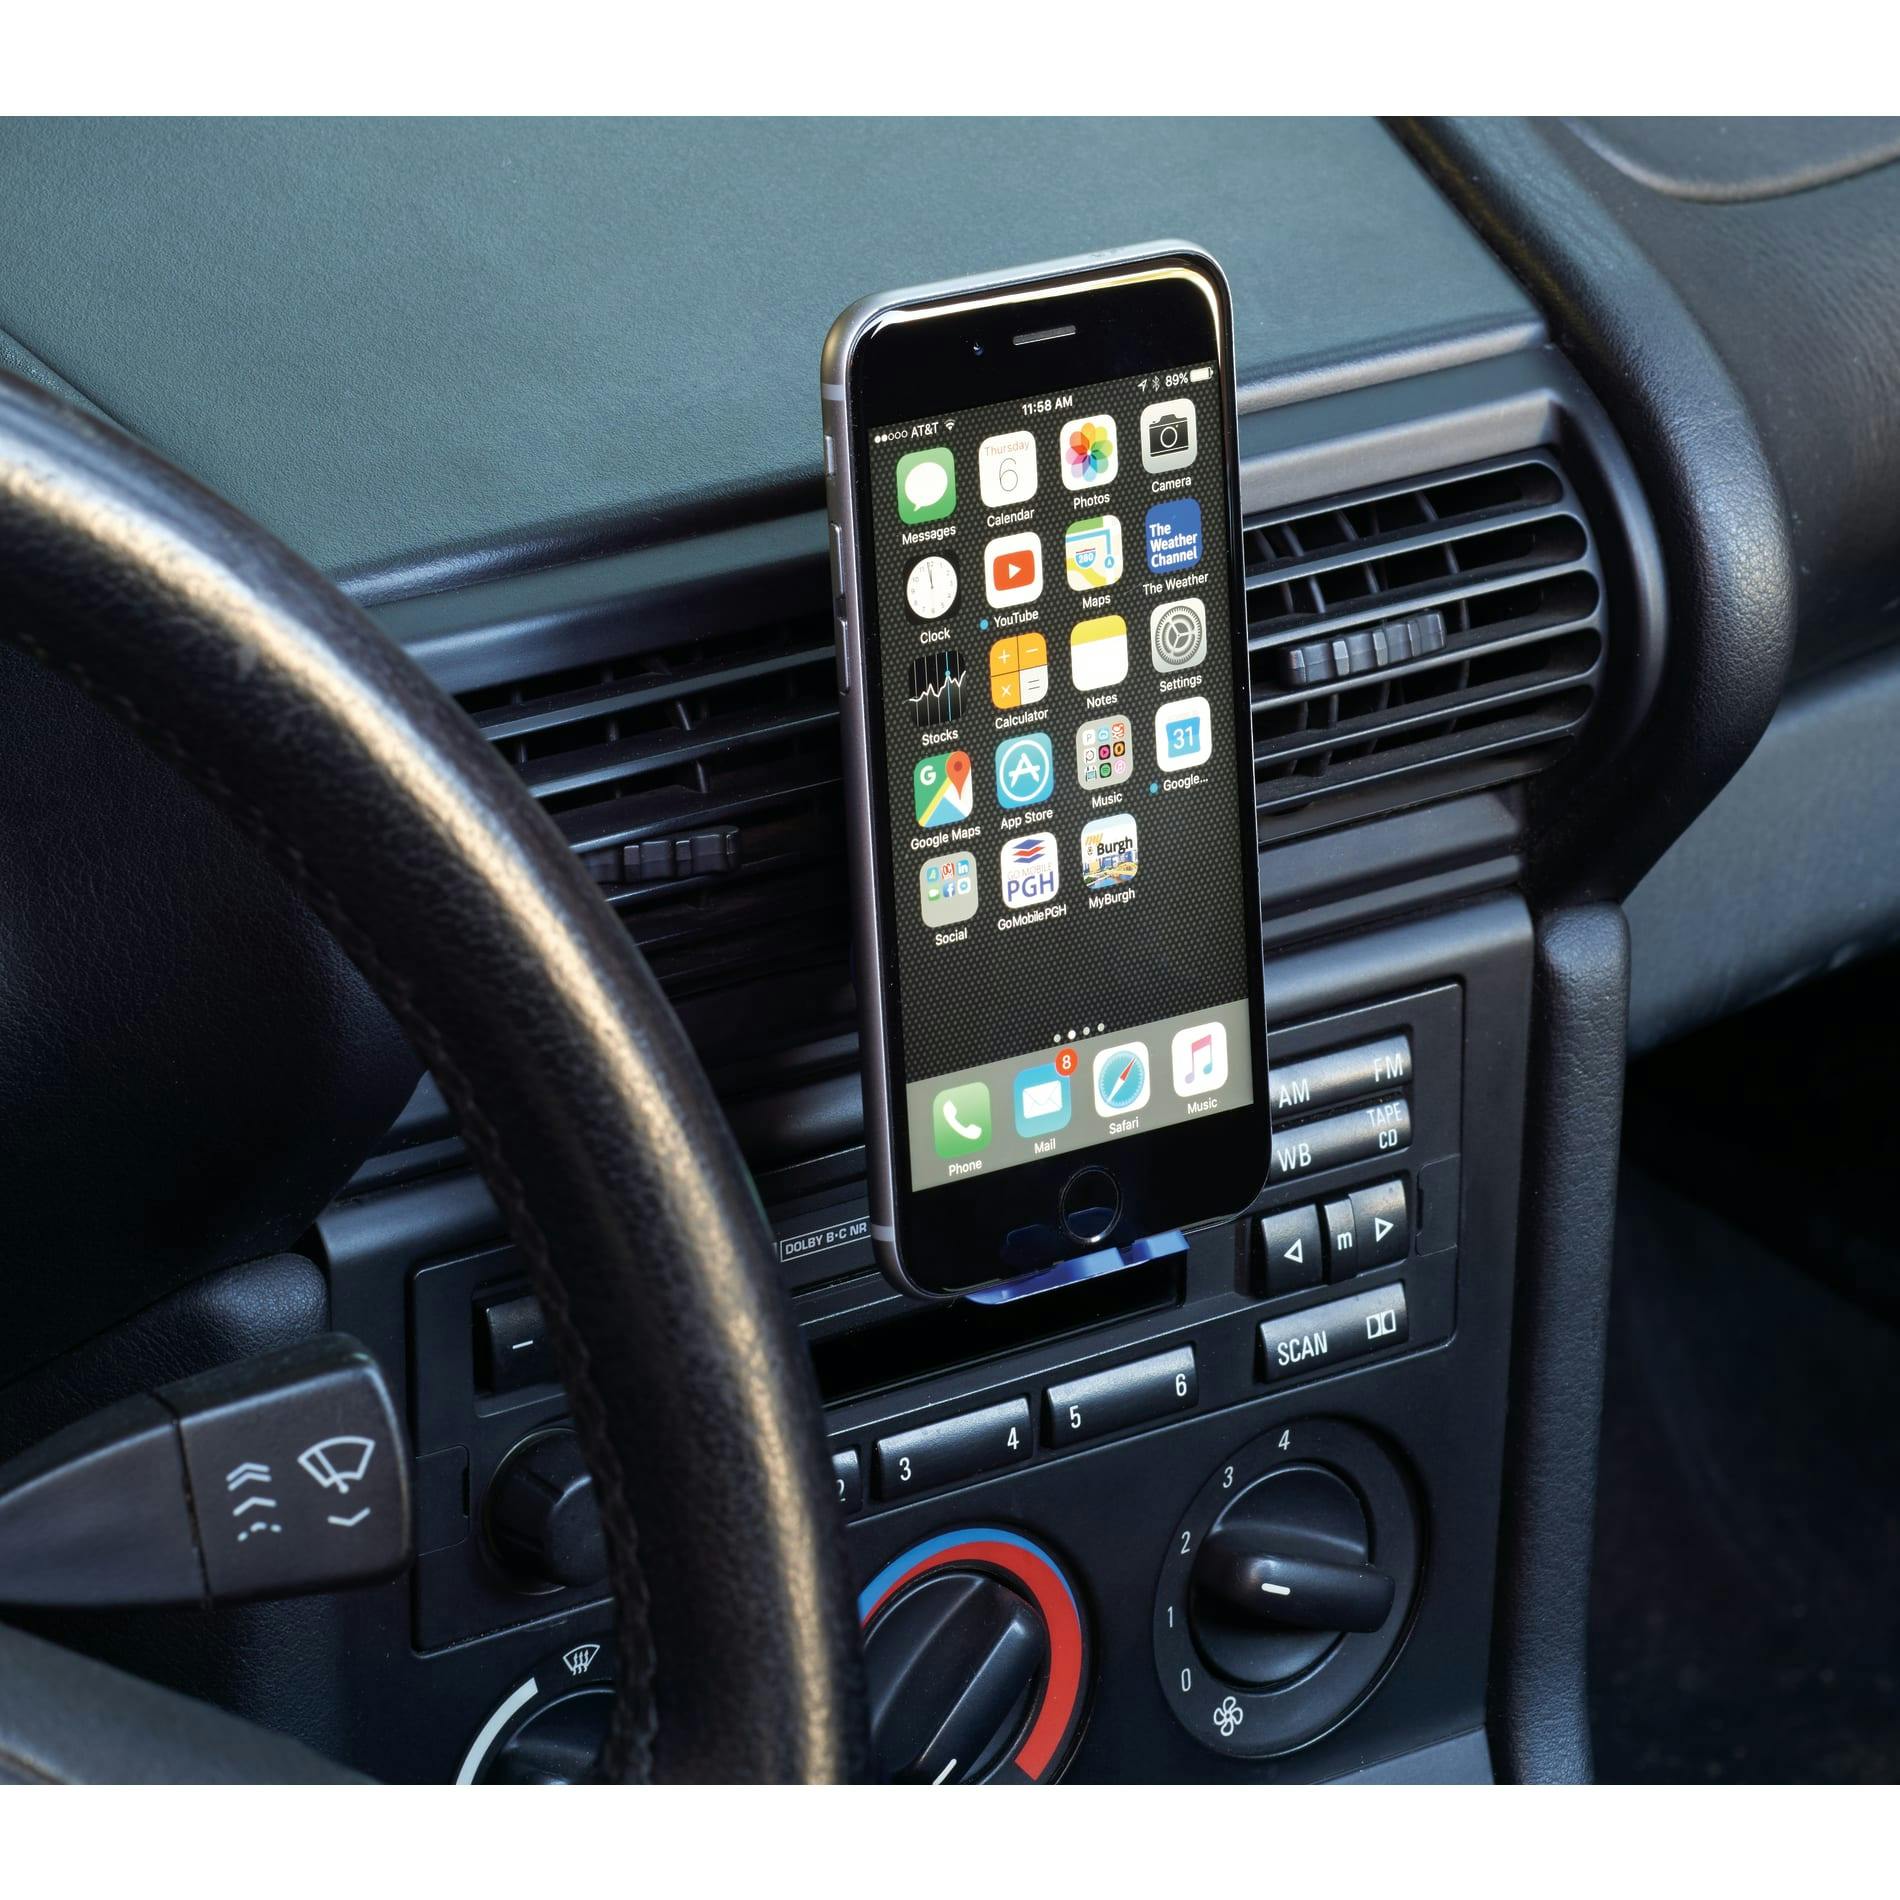 Essence Phone Holder with Air Freshener - additional Image 3